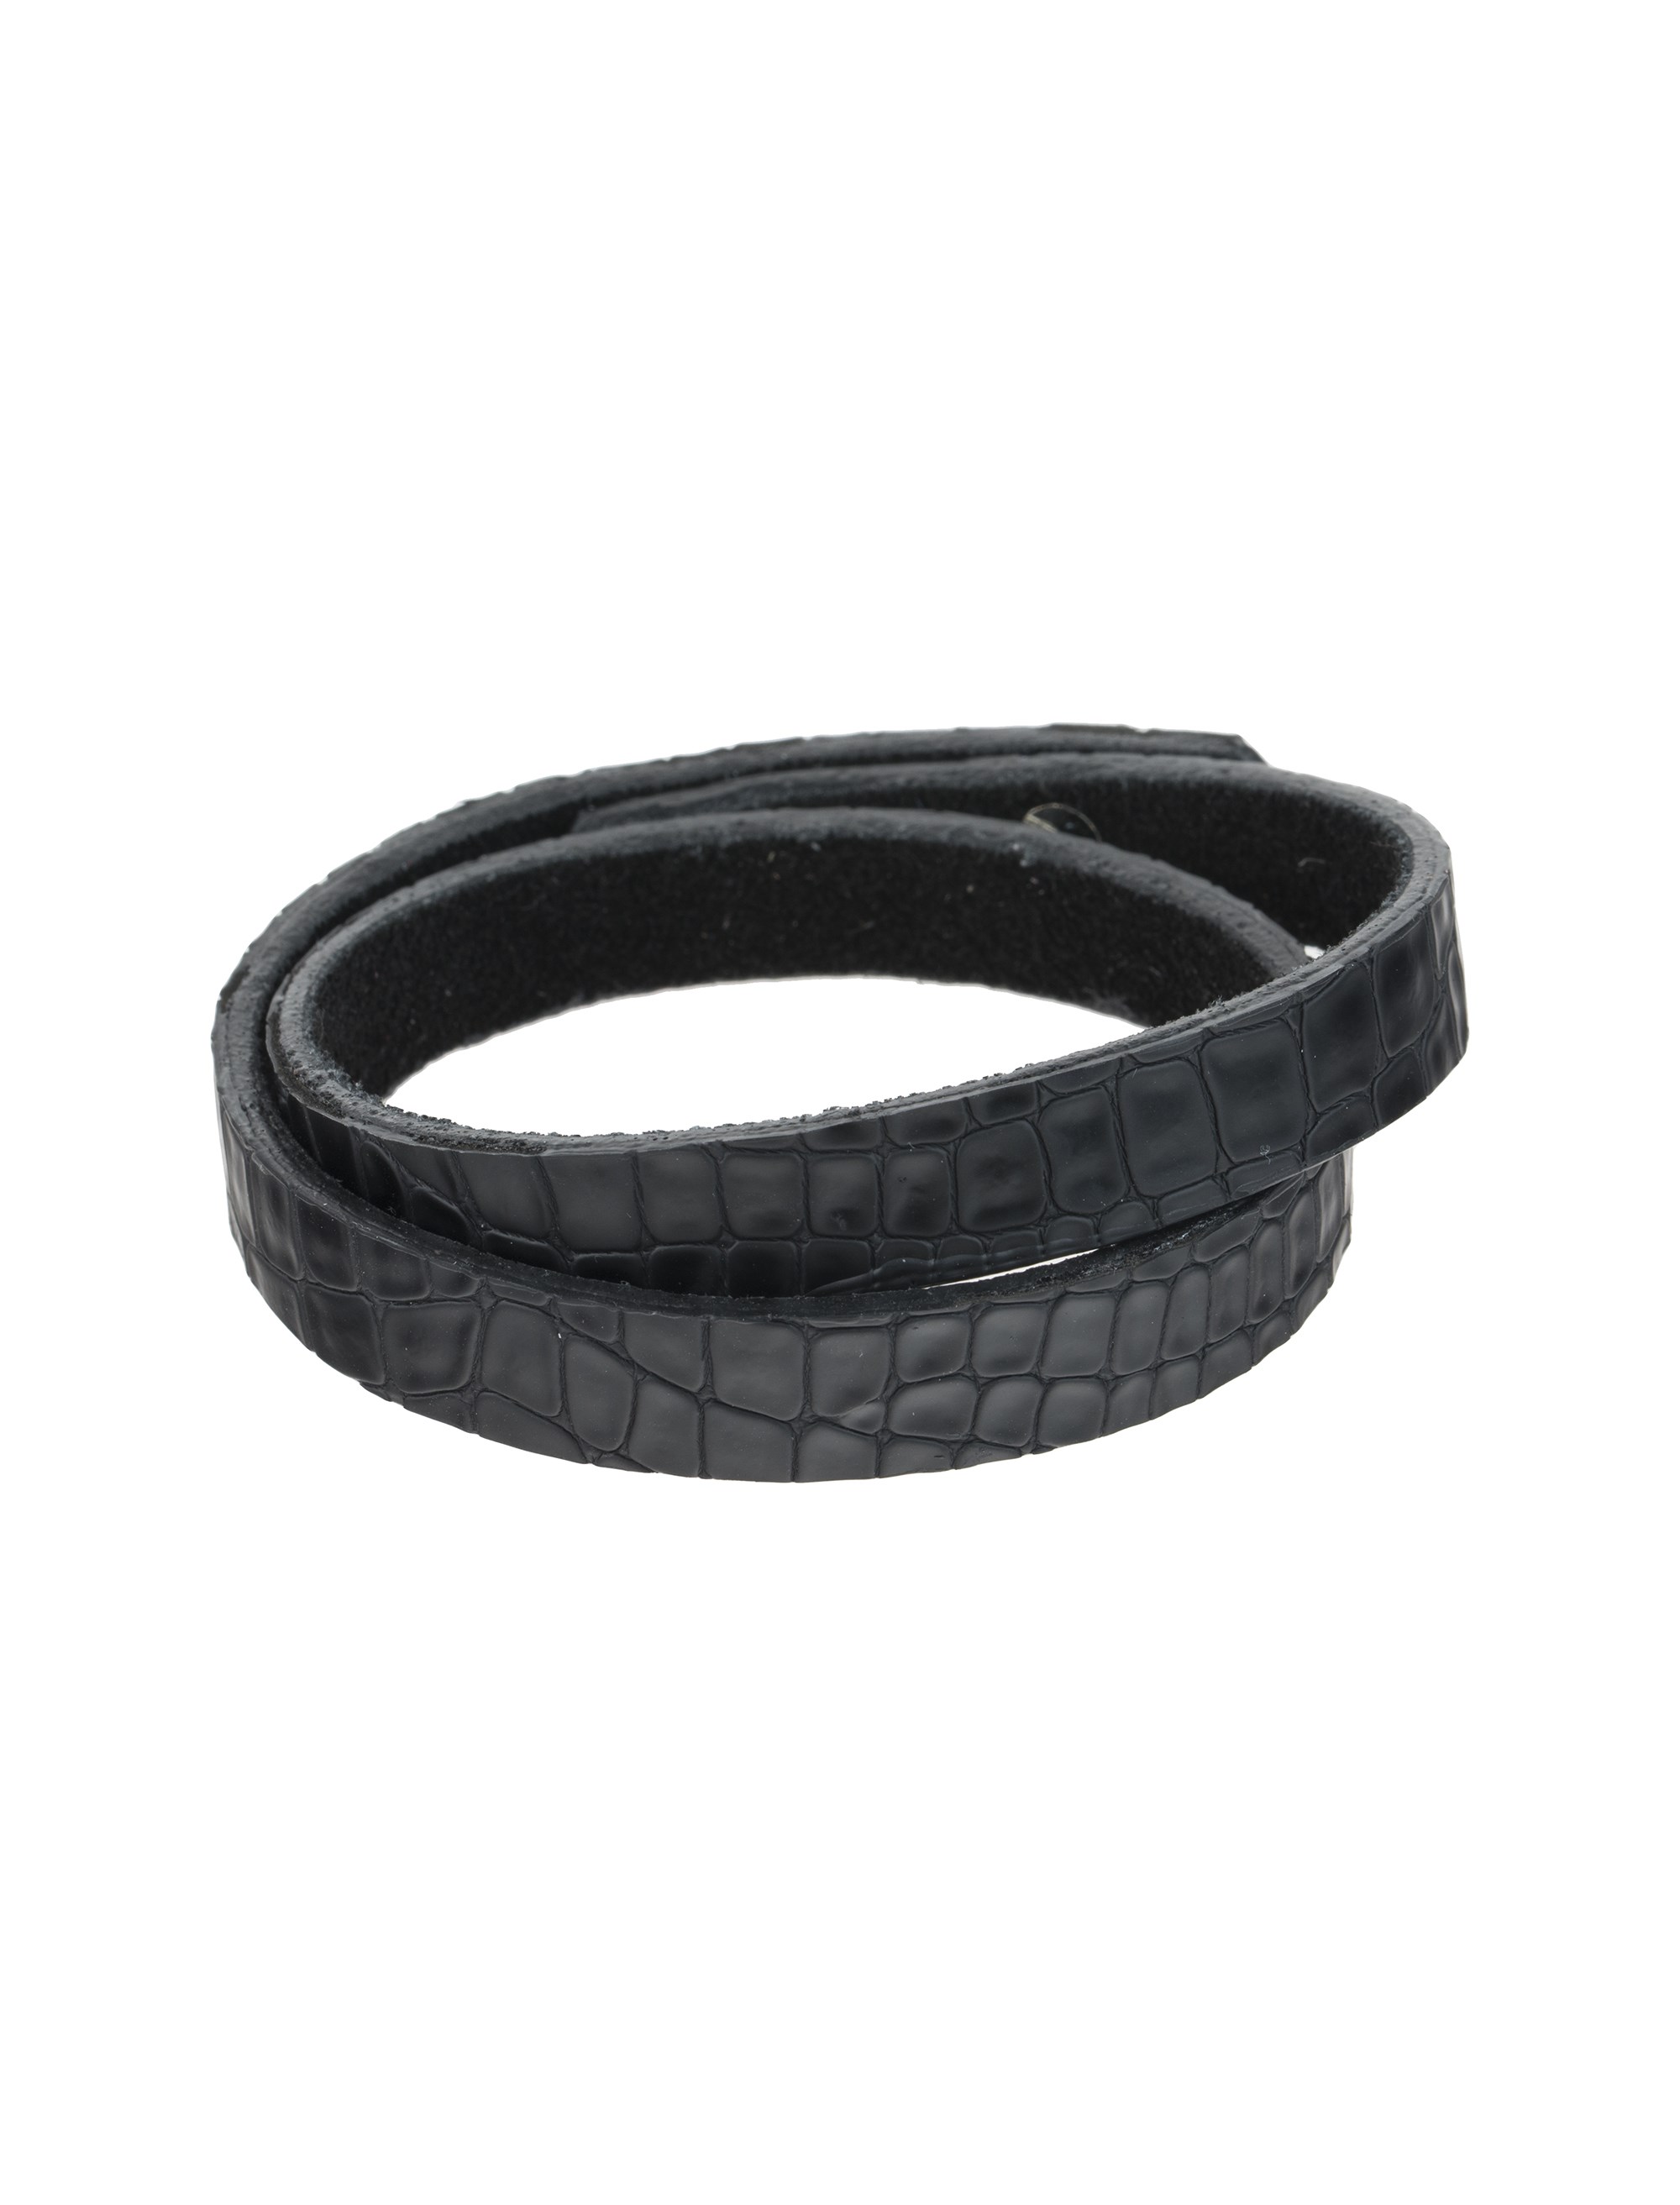 دستبند چرم مردانه - ماکو دیزاین سایز 42 cm - مشکي - 1